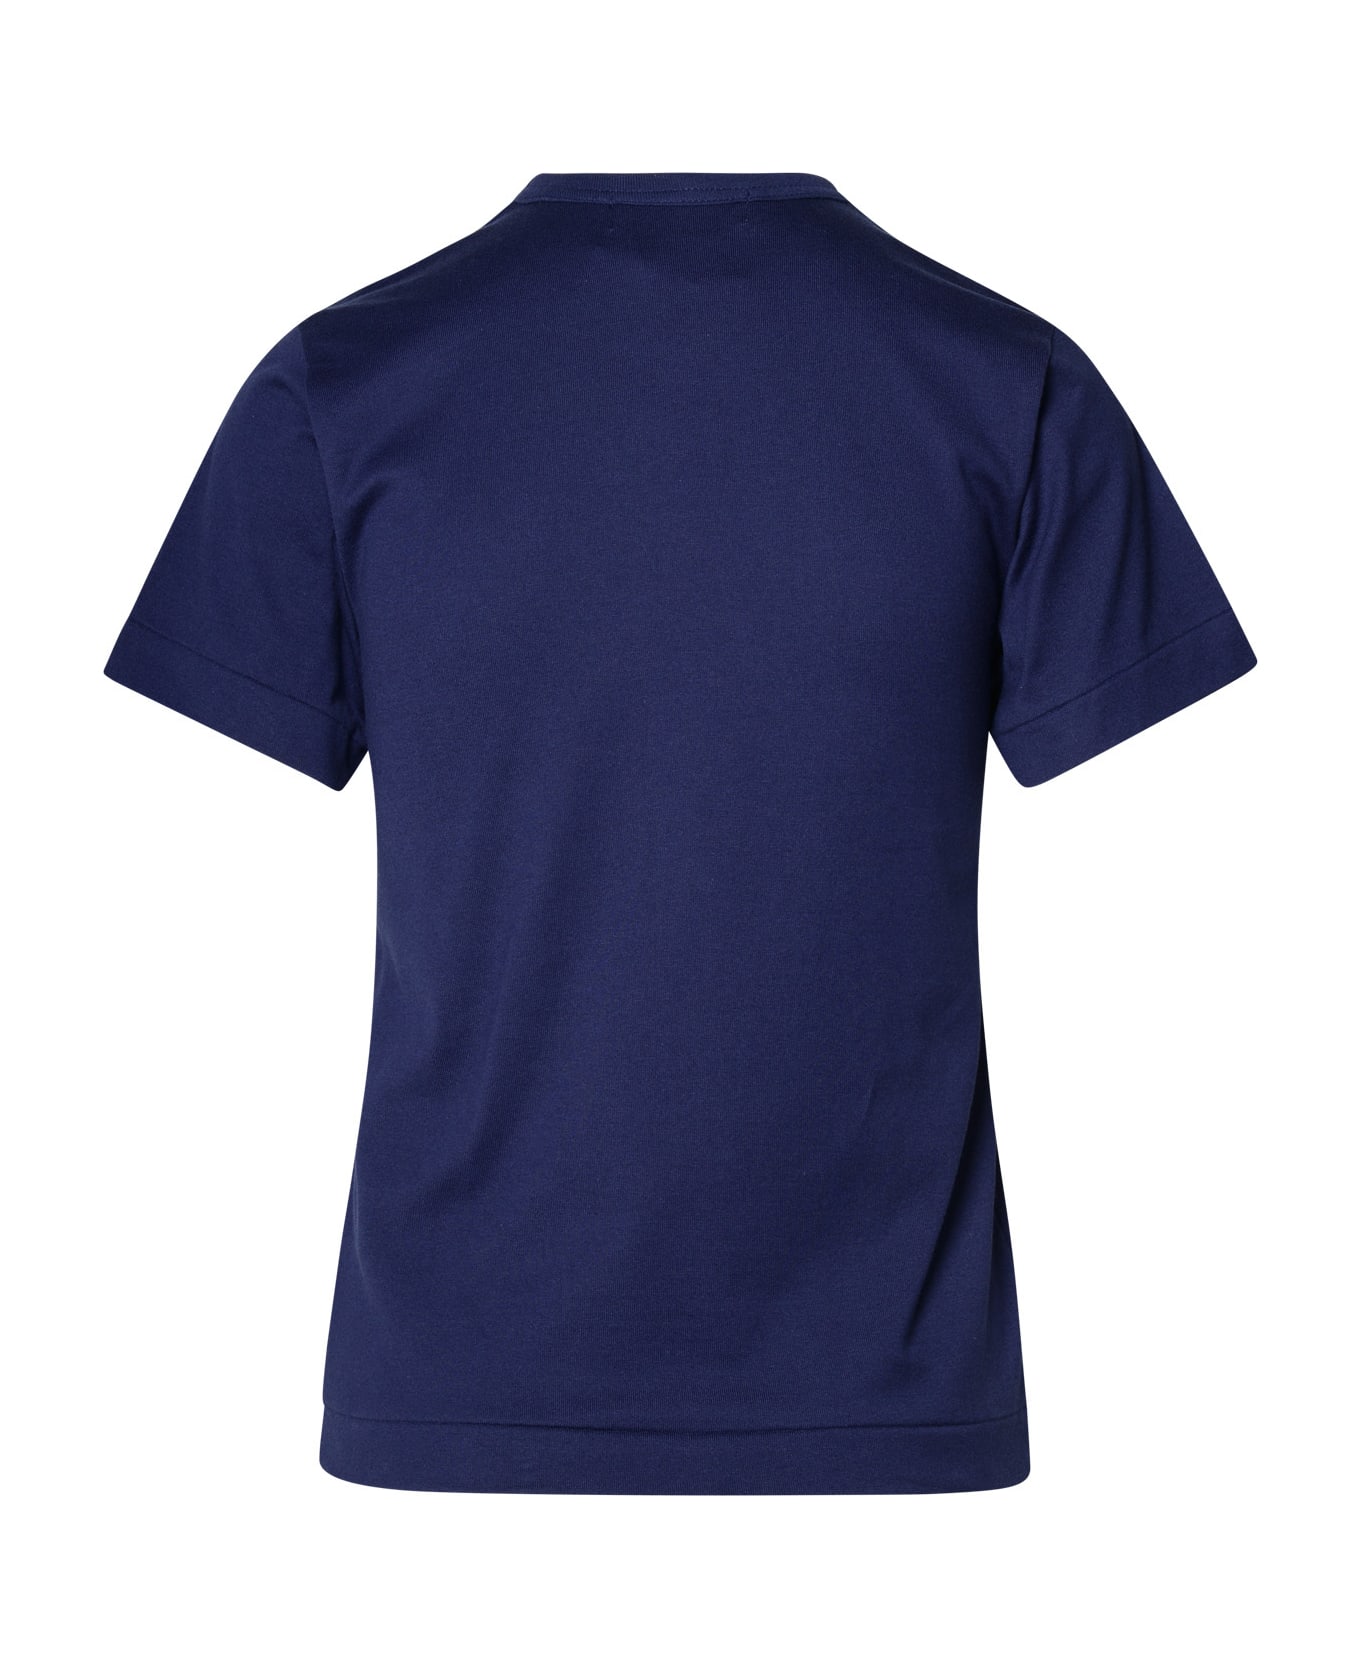 Comme des Garçons Play Blue Cotton T-shirt - Navy